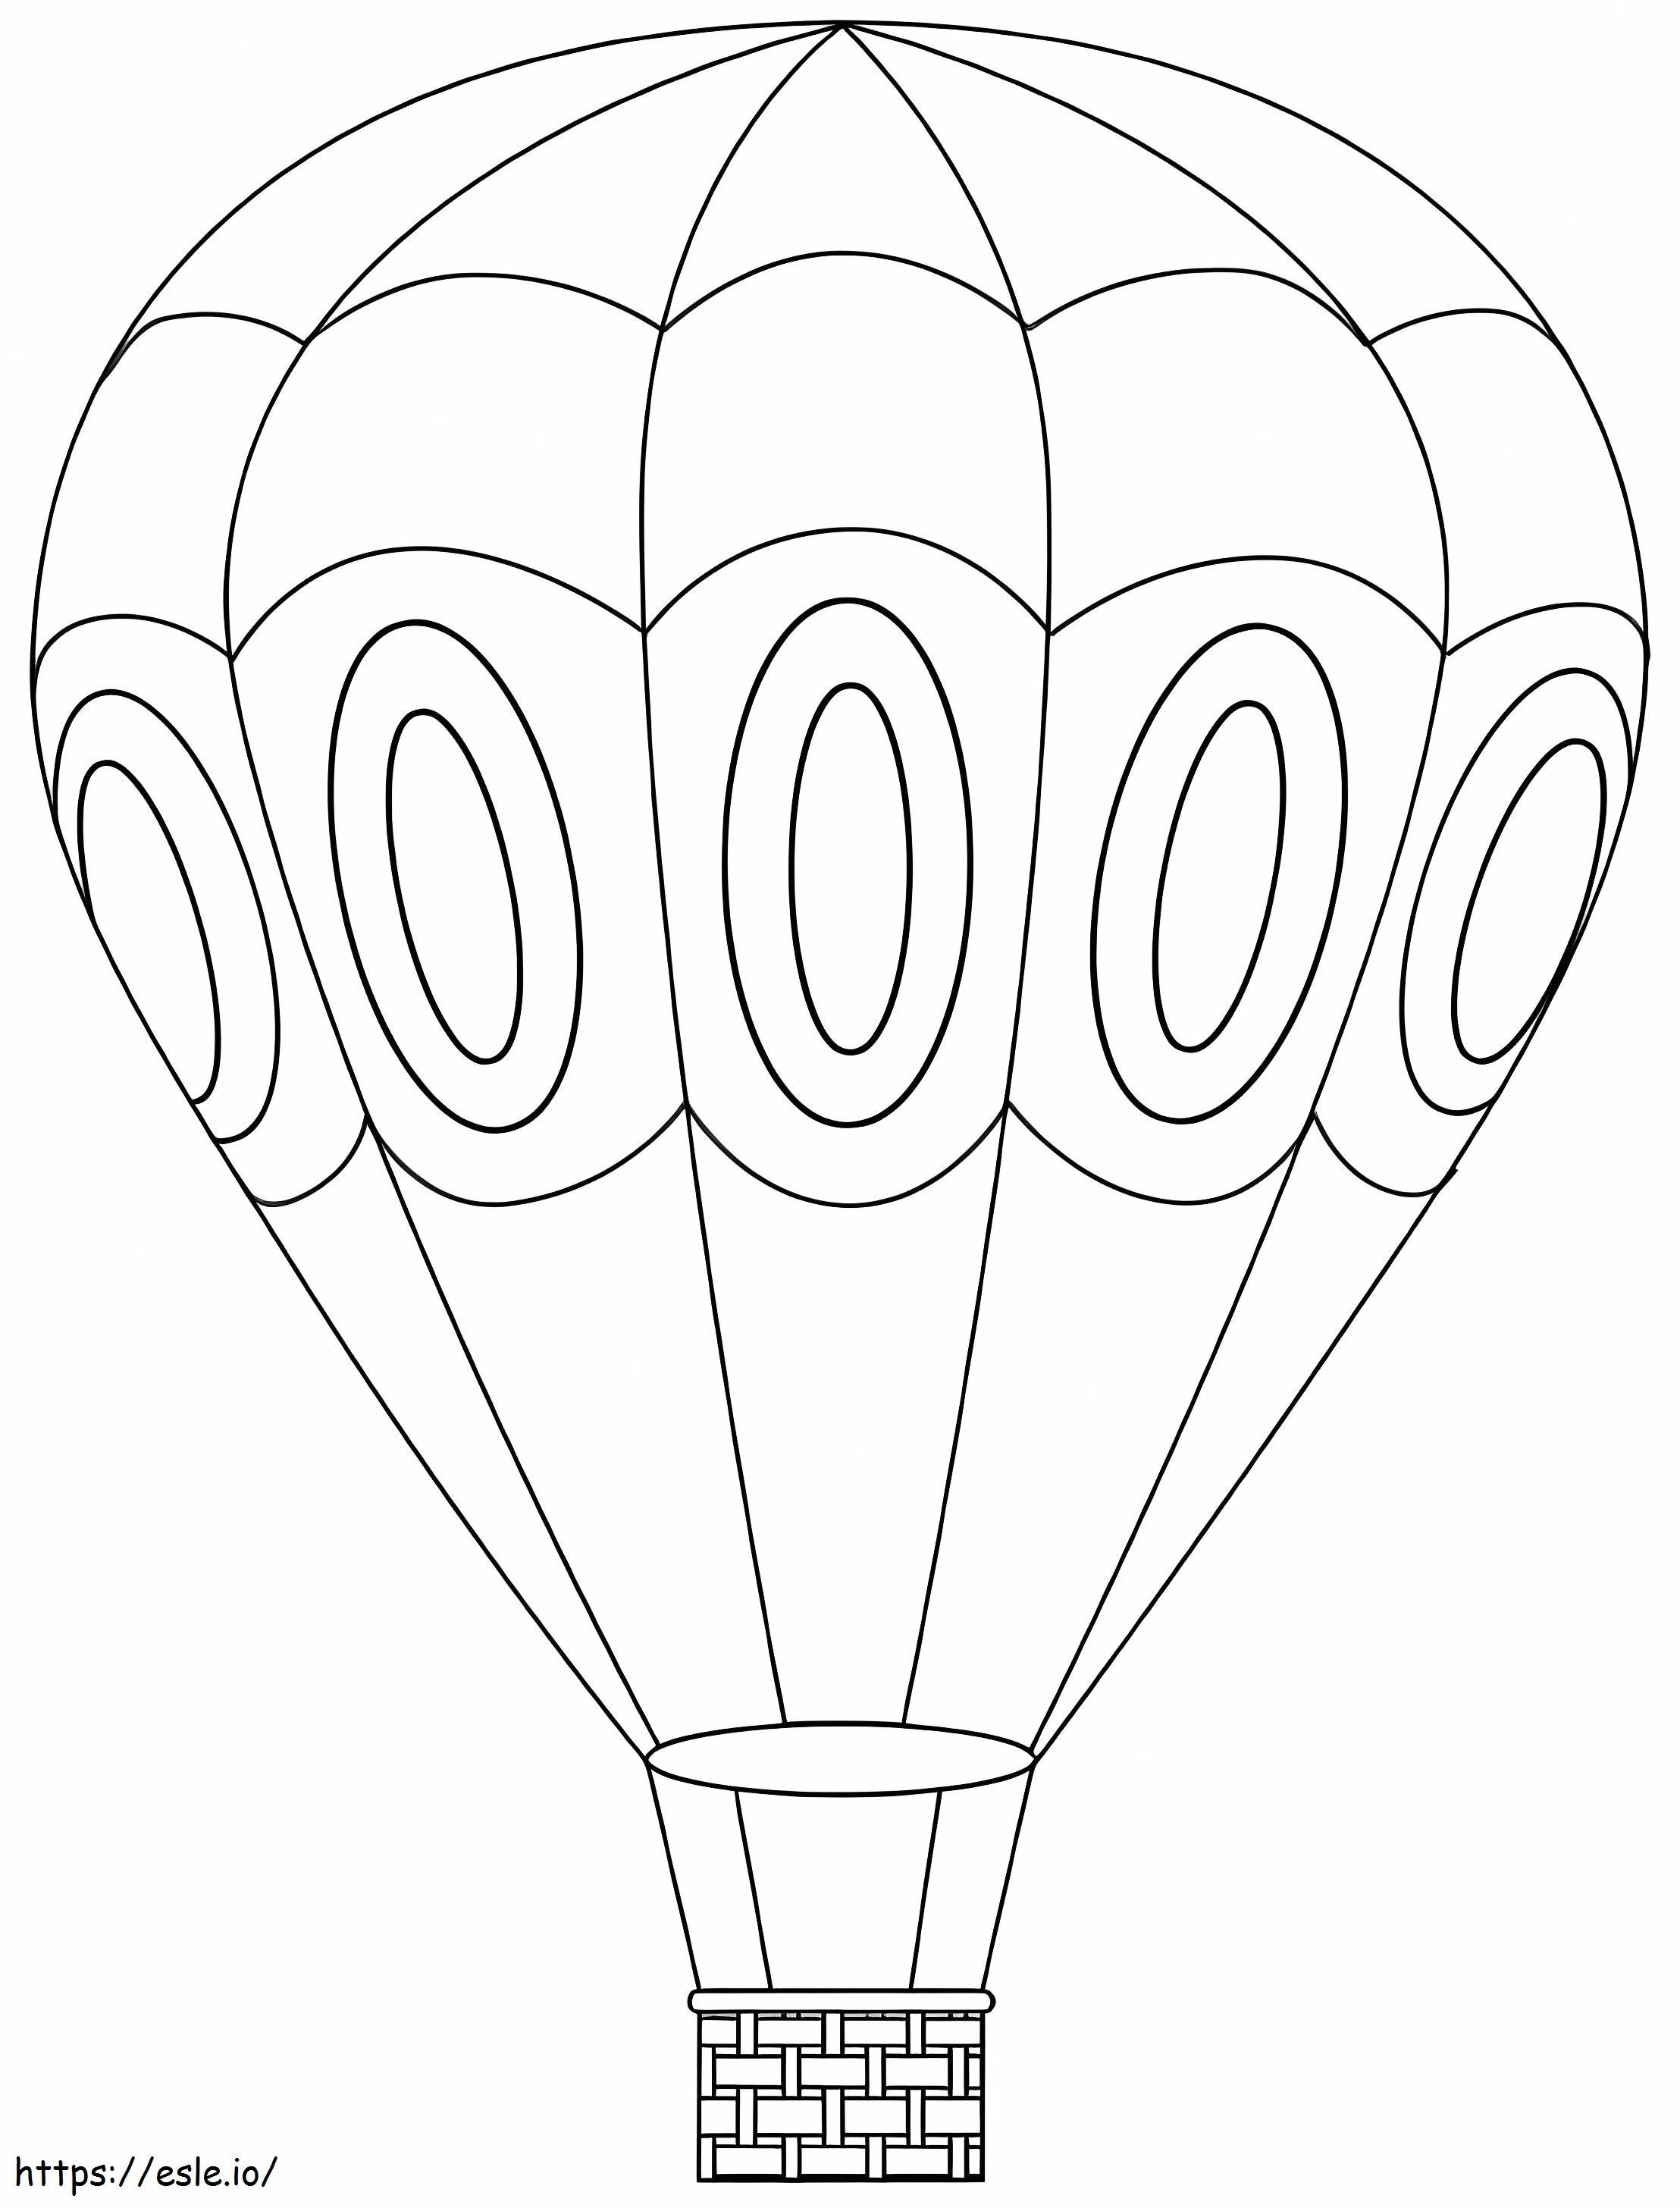 Einfacher Heißluftballon ausmalbilder